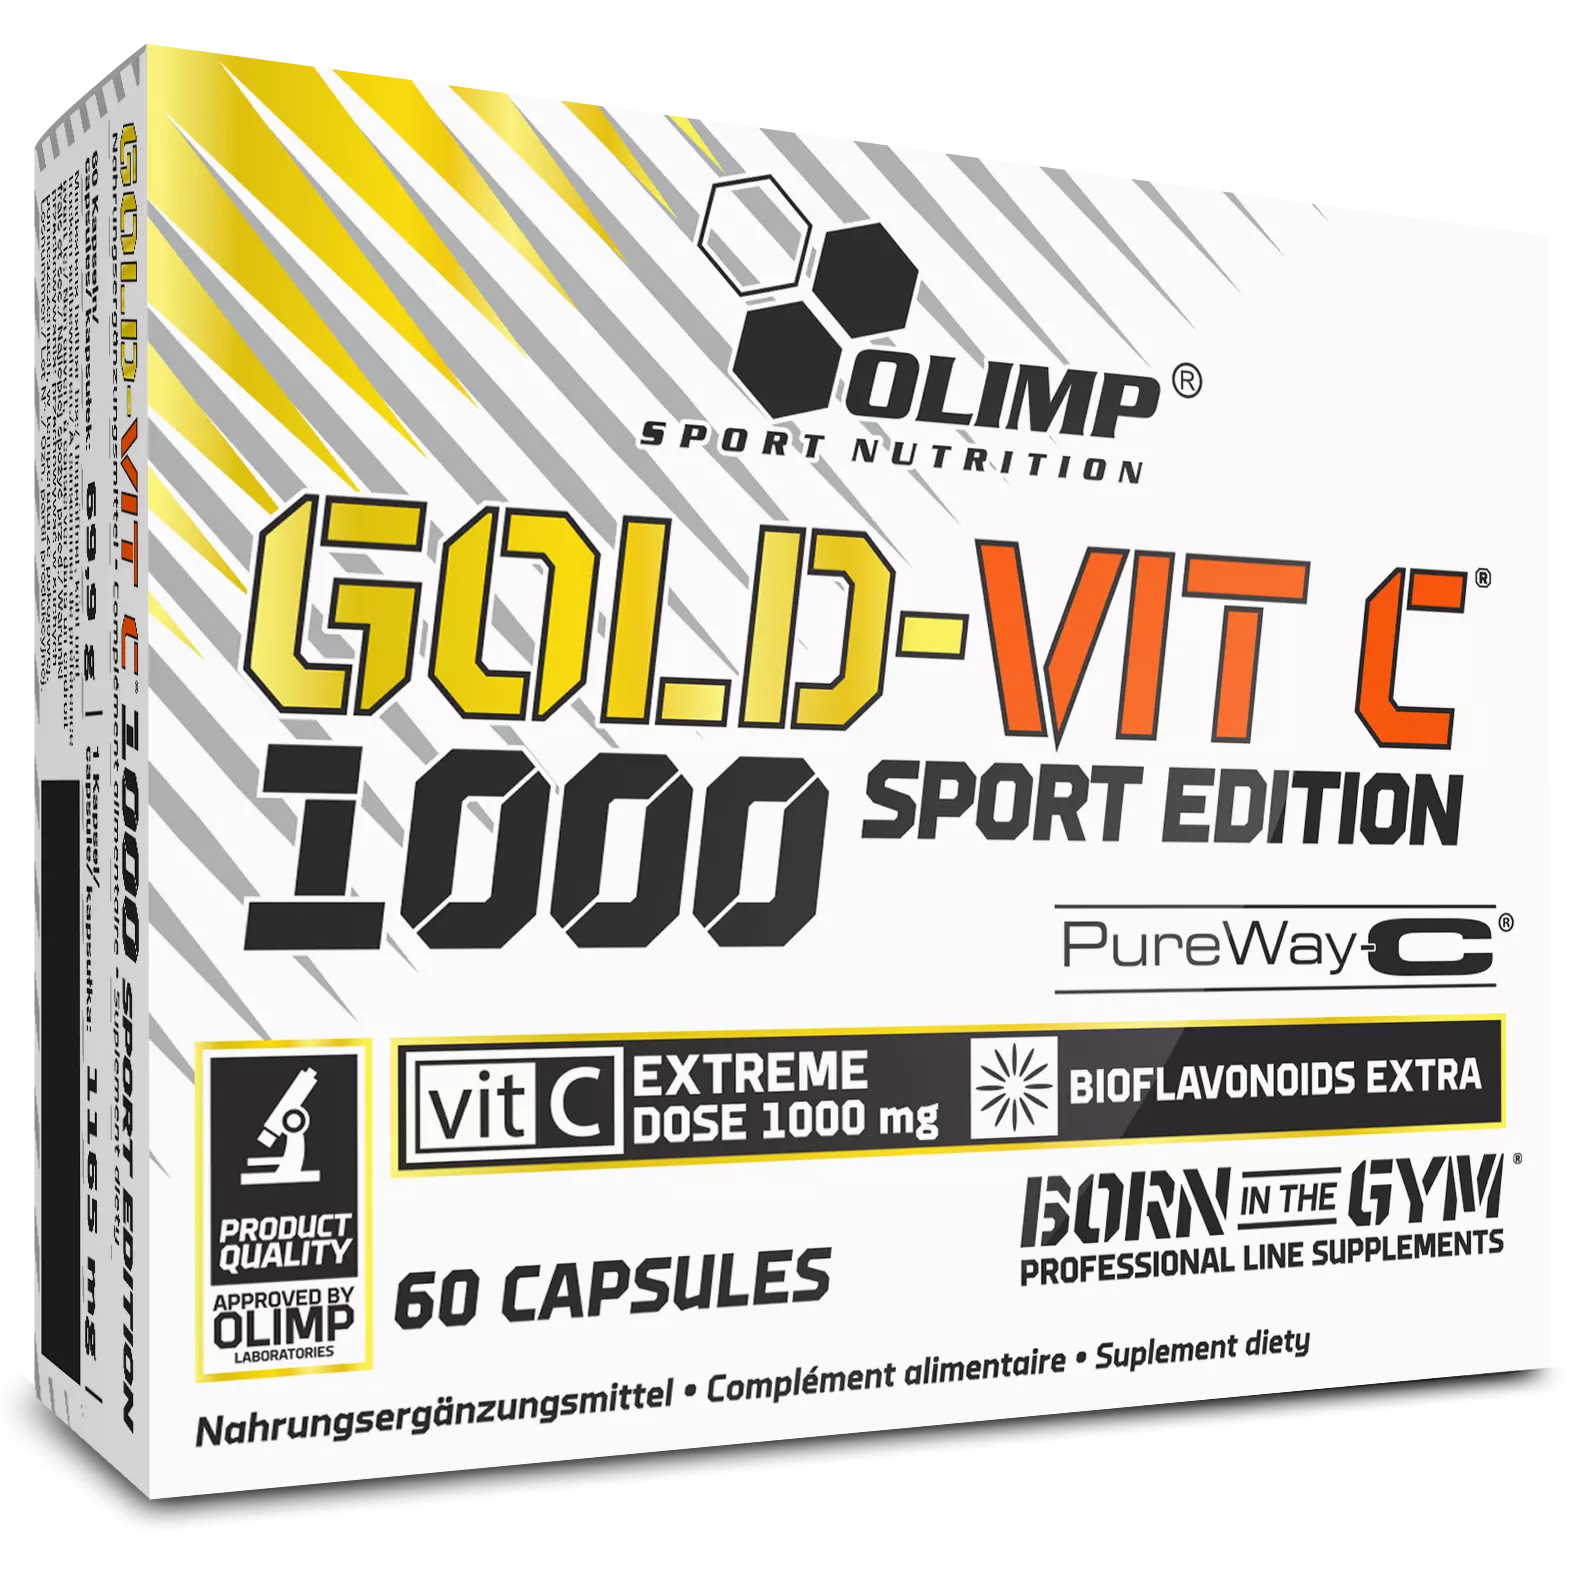 Gold c vitamin c. Gold-Vit c 1000 Sport Edition. Gold Vit c Olimp. Olimp. Gold-Vit c 1000 - 60 капс. Gold-Vit c 1000 Olimp Sport Nutrition.